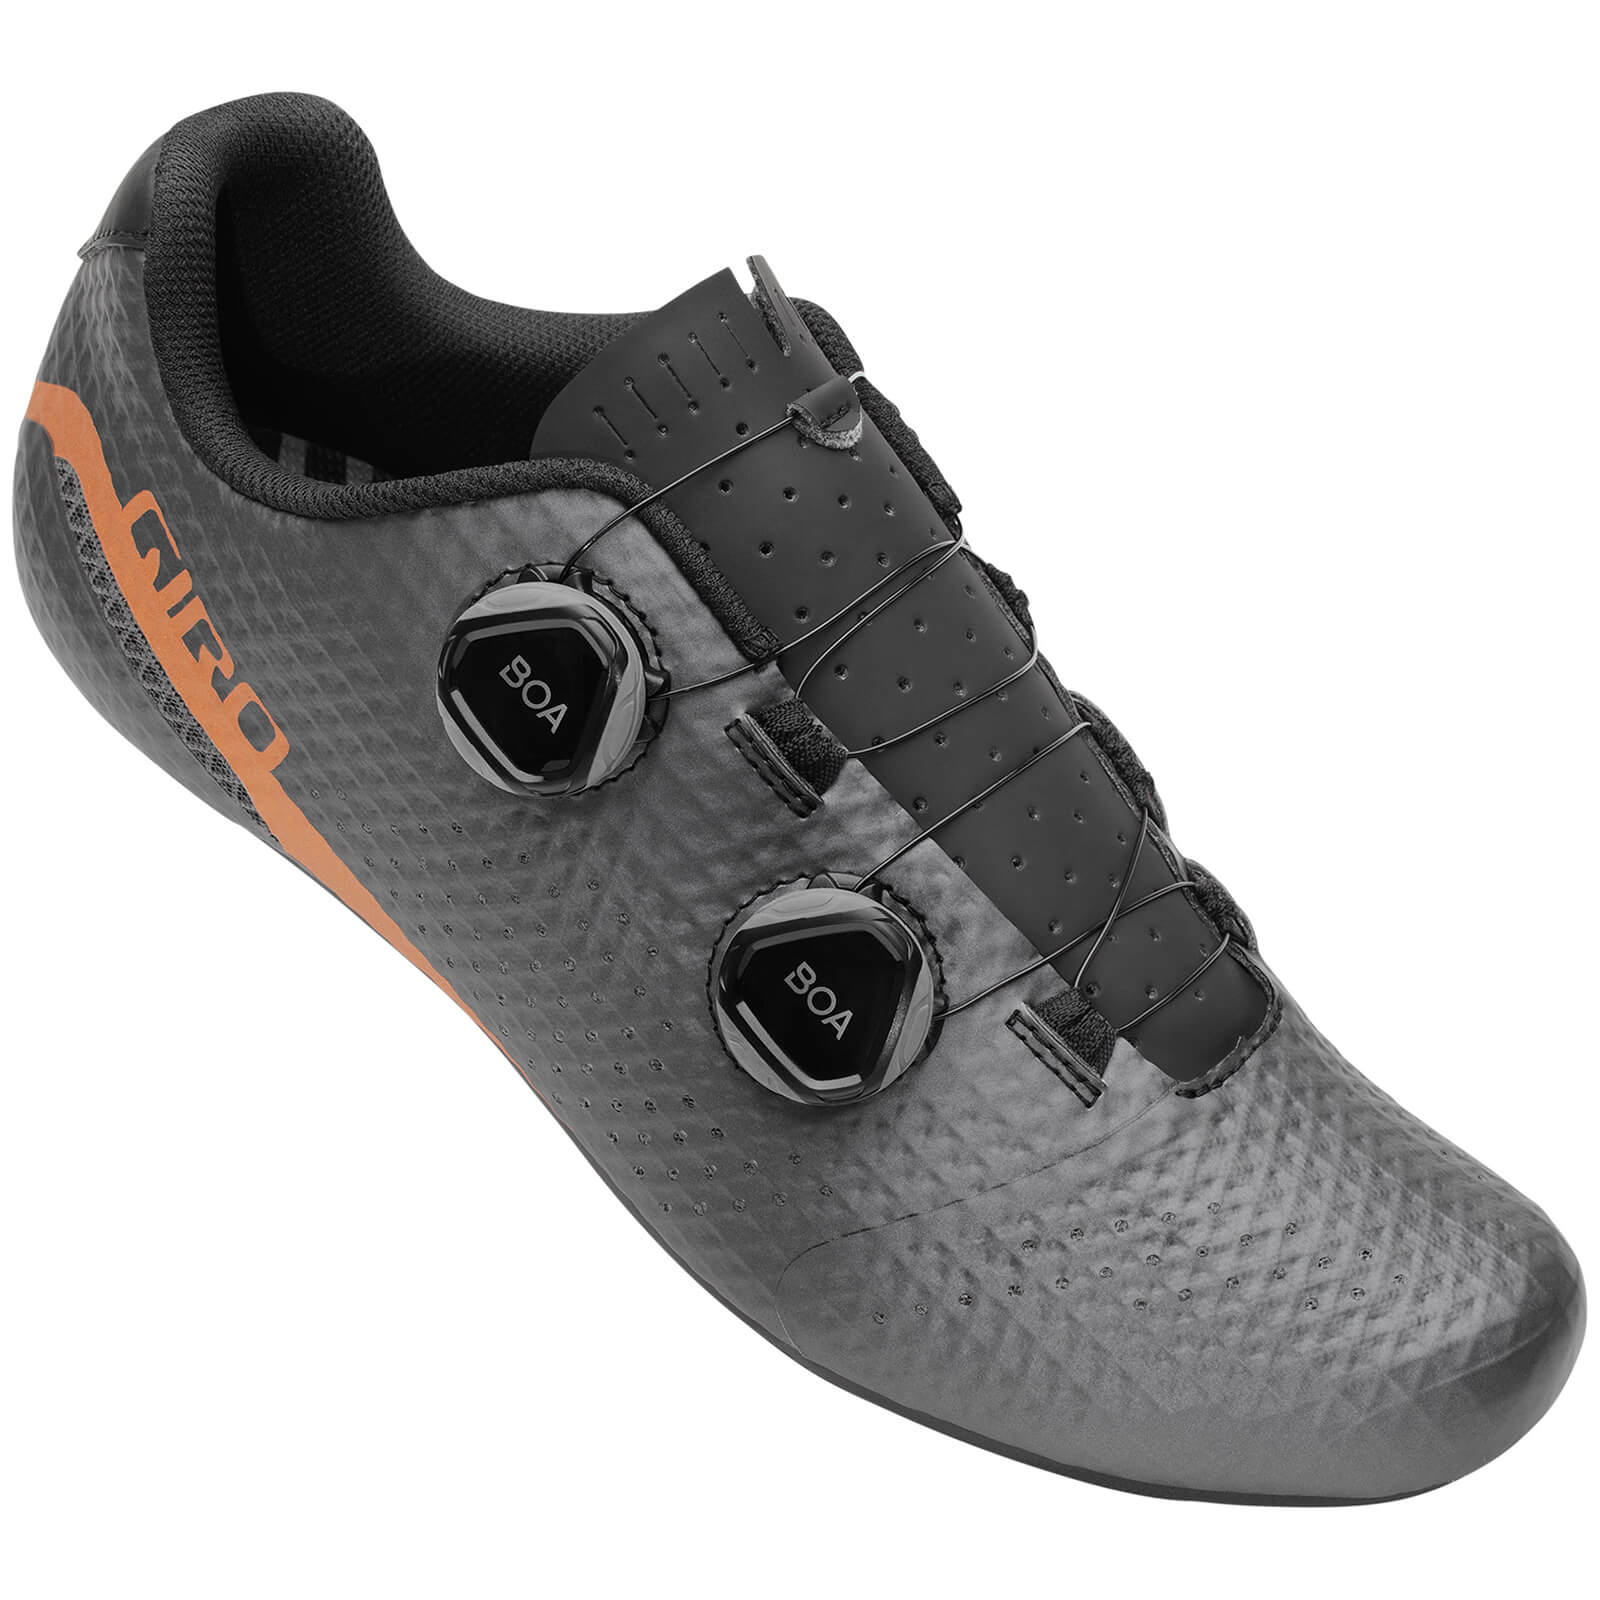 Giro Regime Road Shoe - EU 40 - Black/Copper